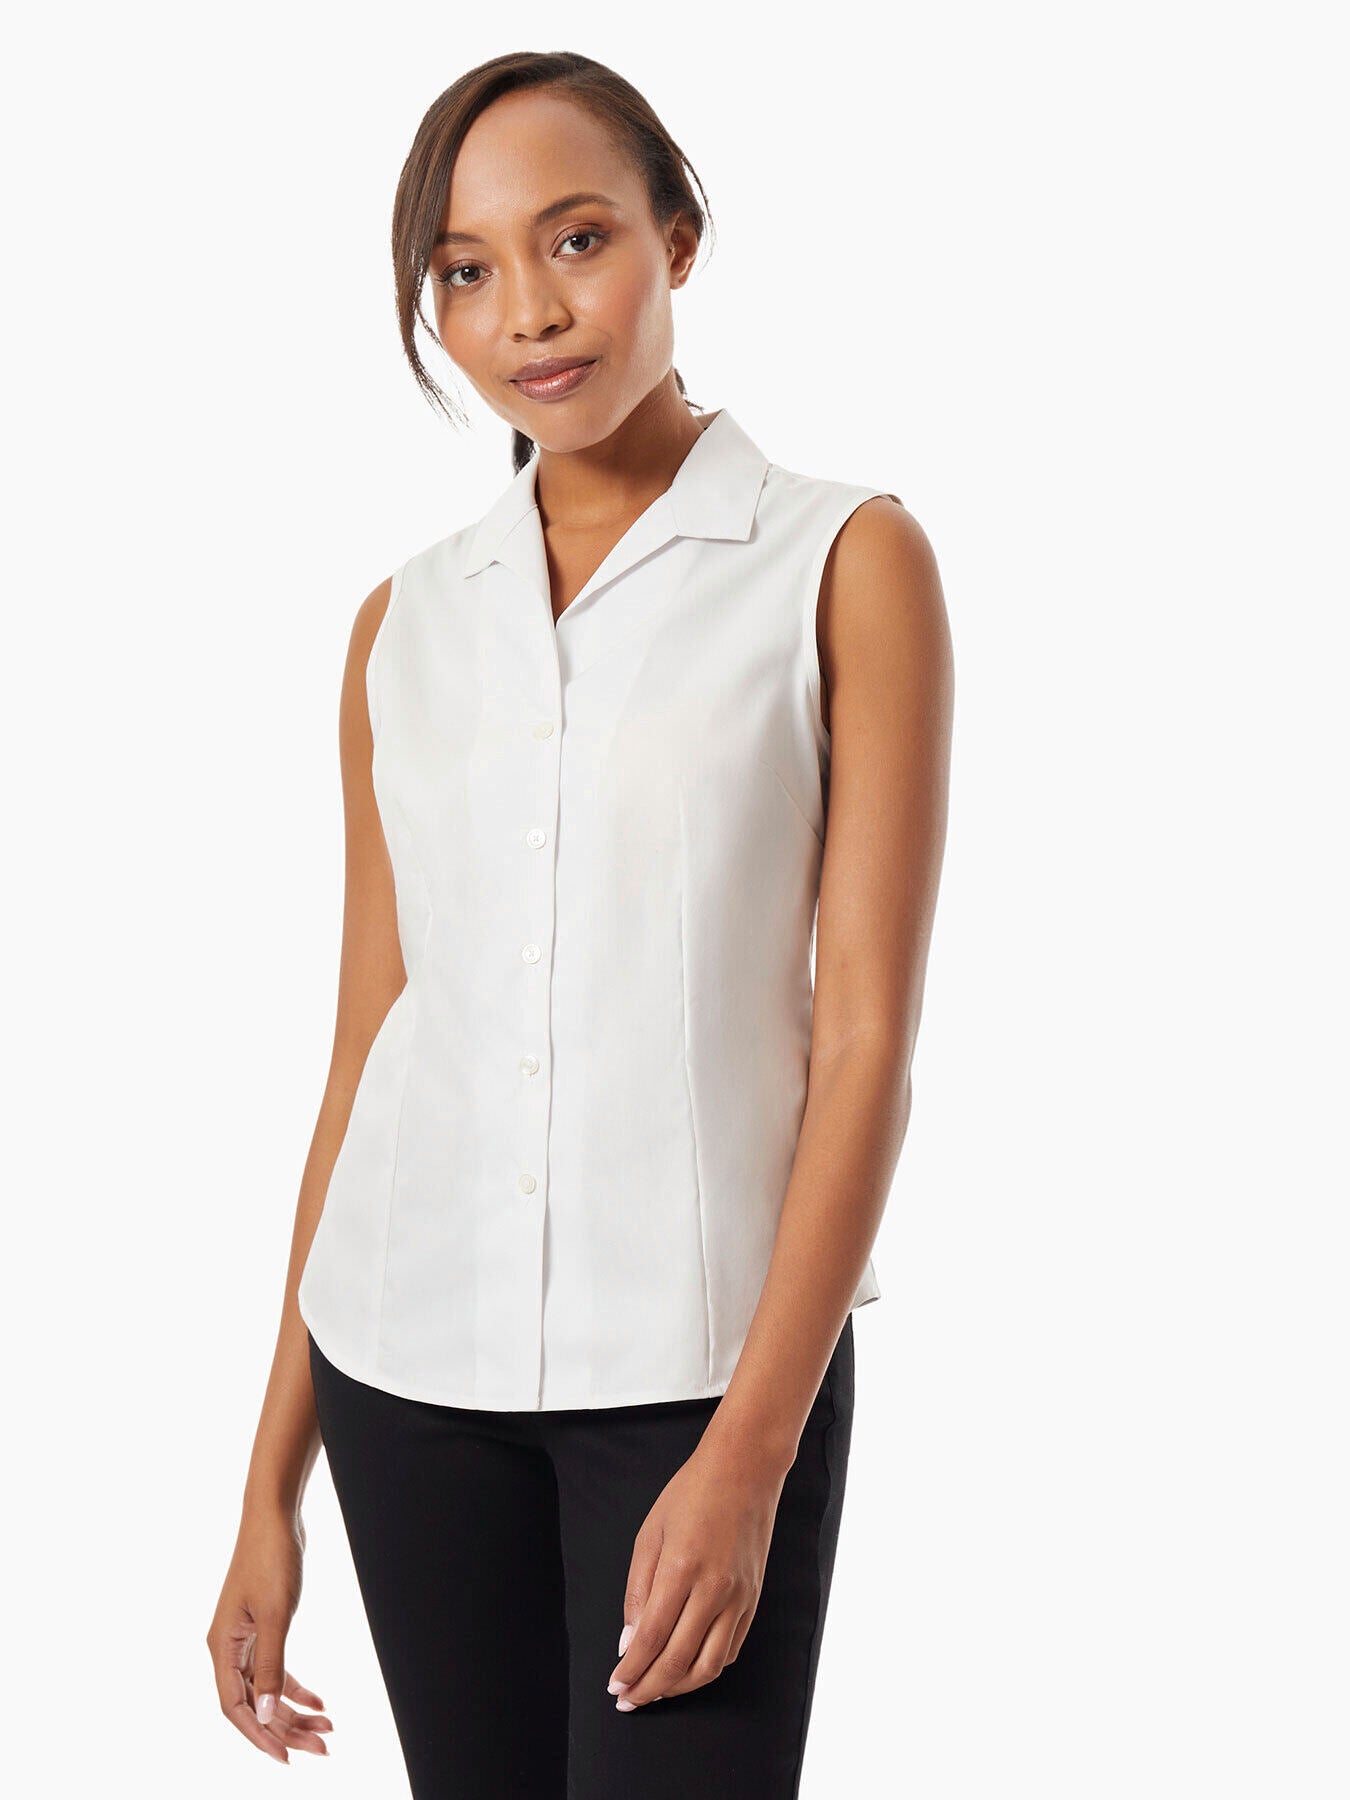 Easy-Care Shirt - White Sleeveless Shirt